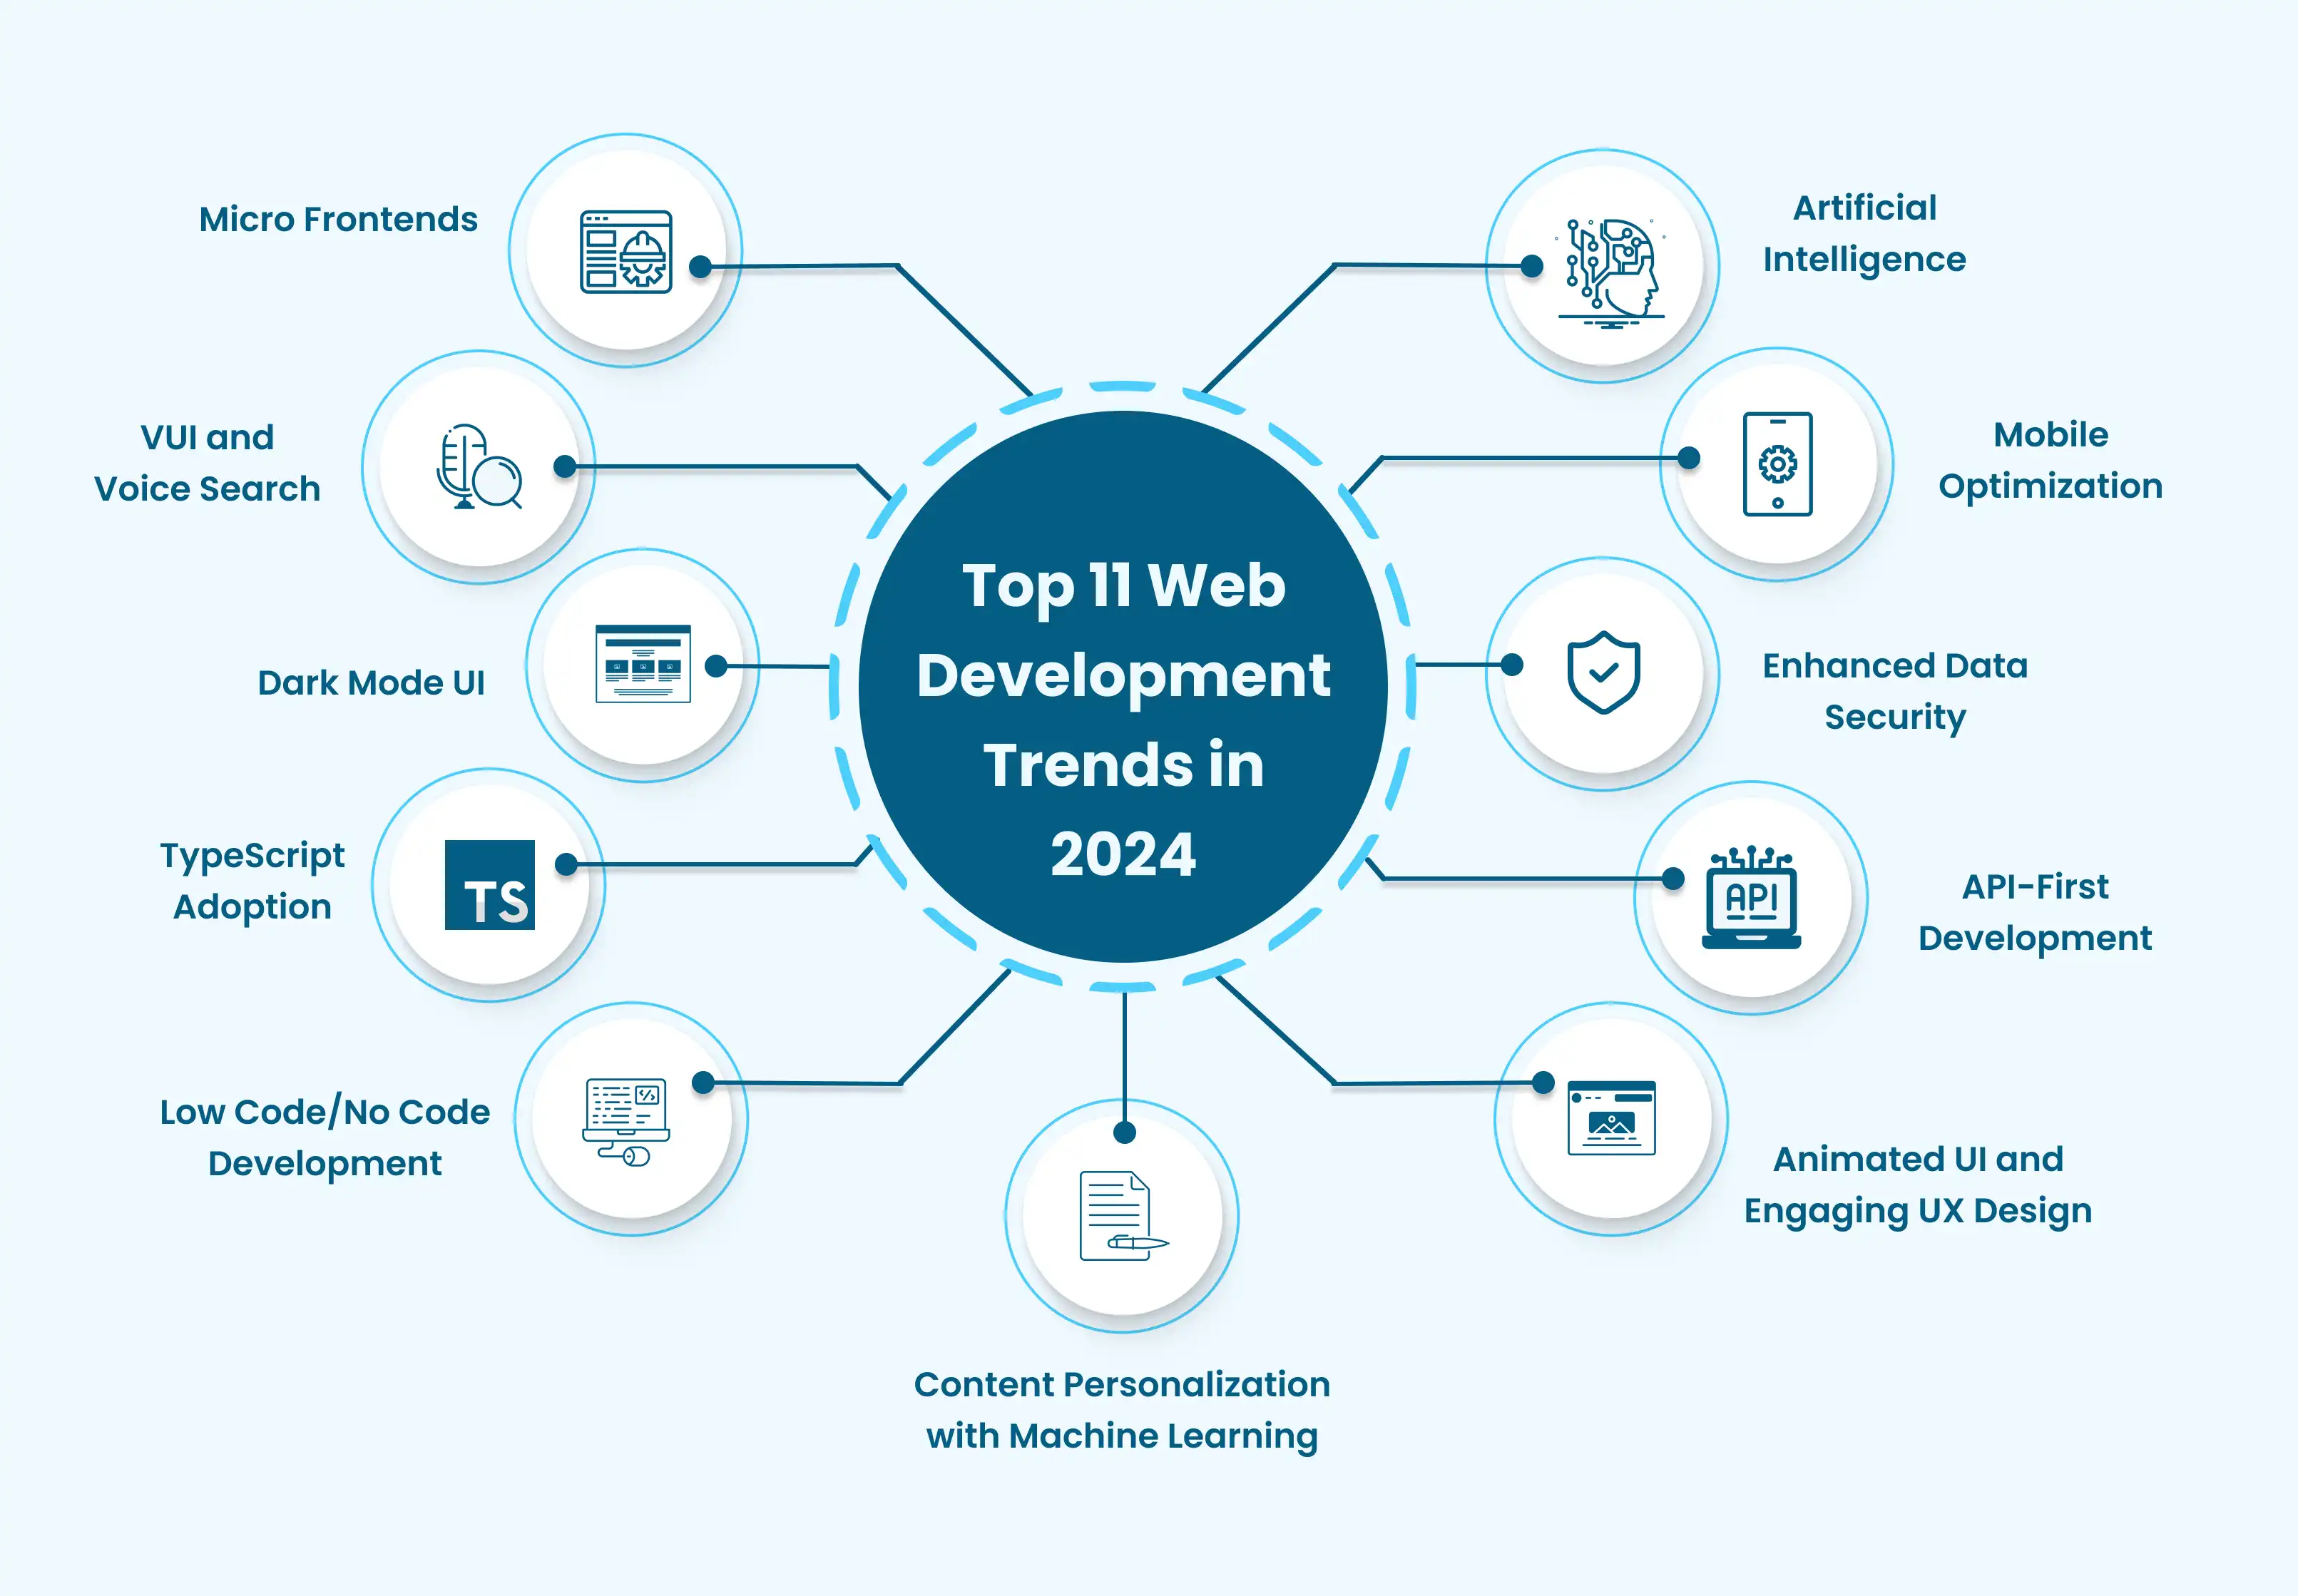 A Visual representation of Top 11 Web Development Trends for 2024.